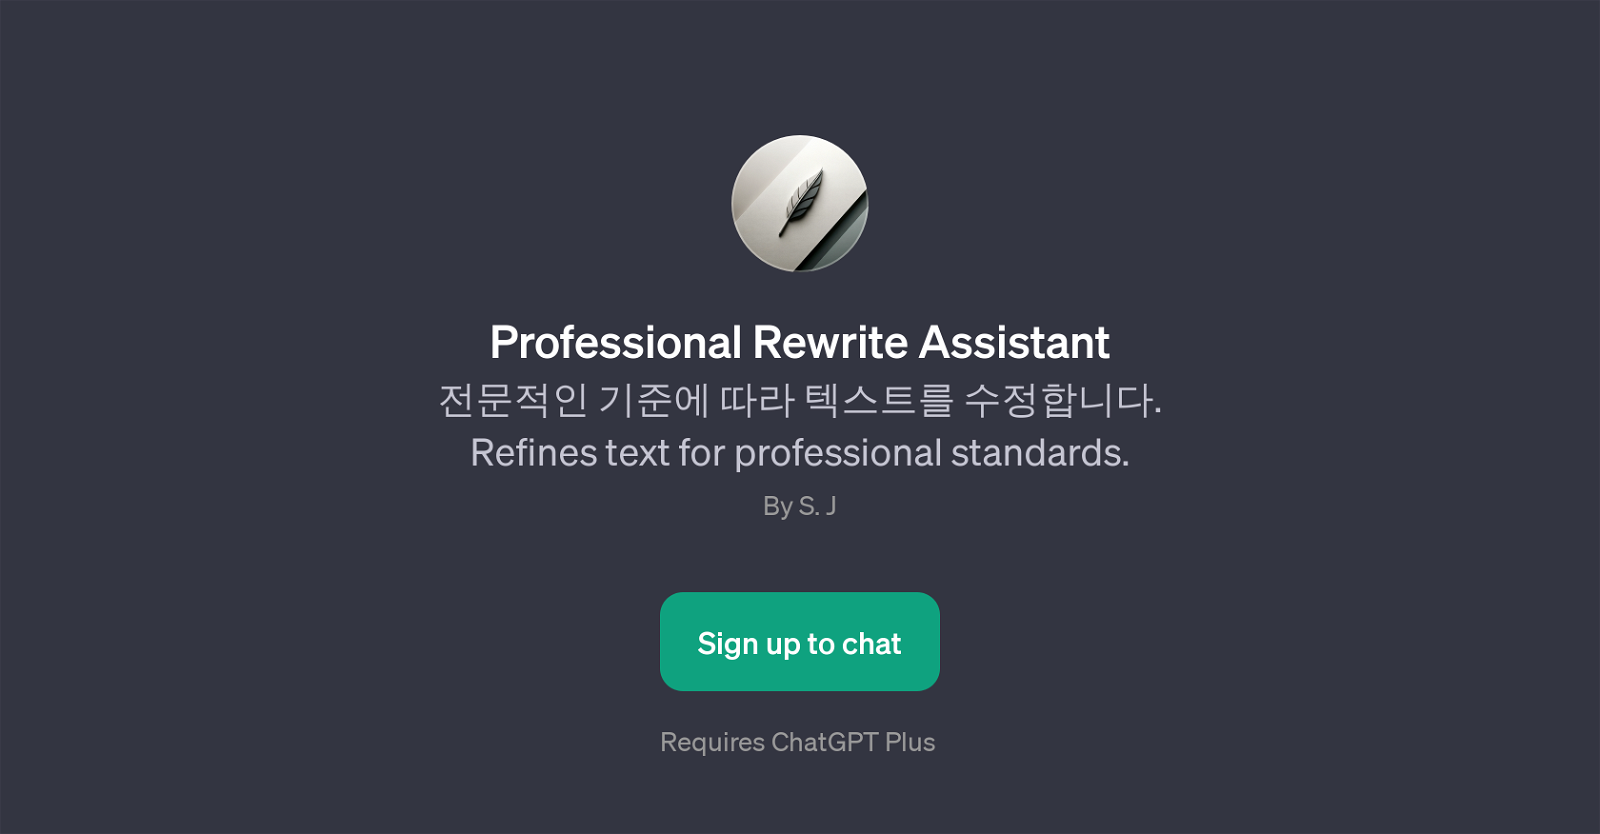 Professional Rewrite Assistant website